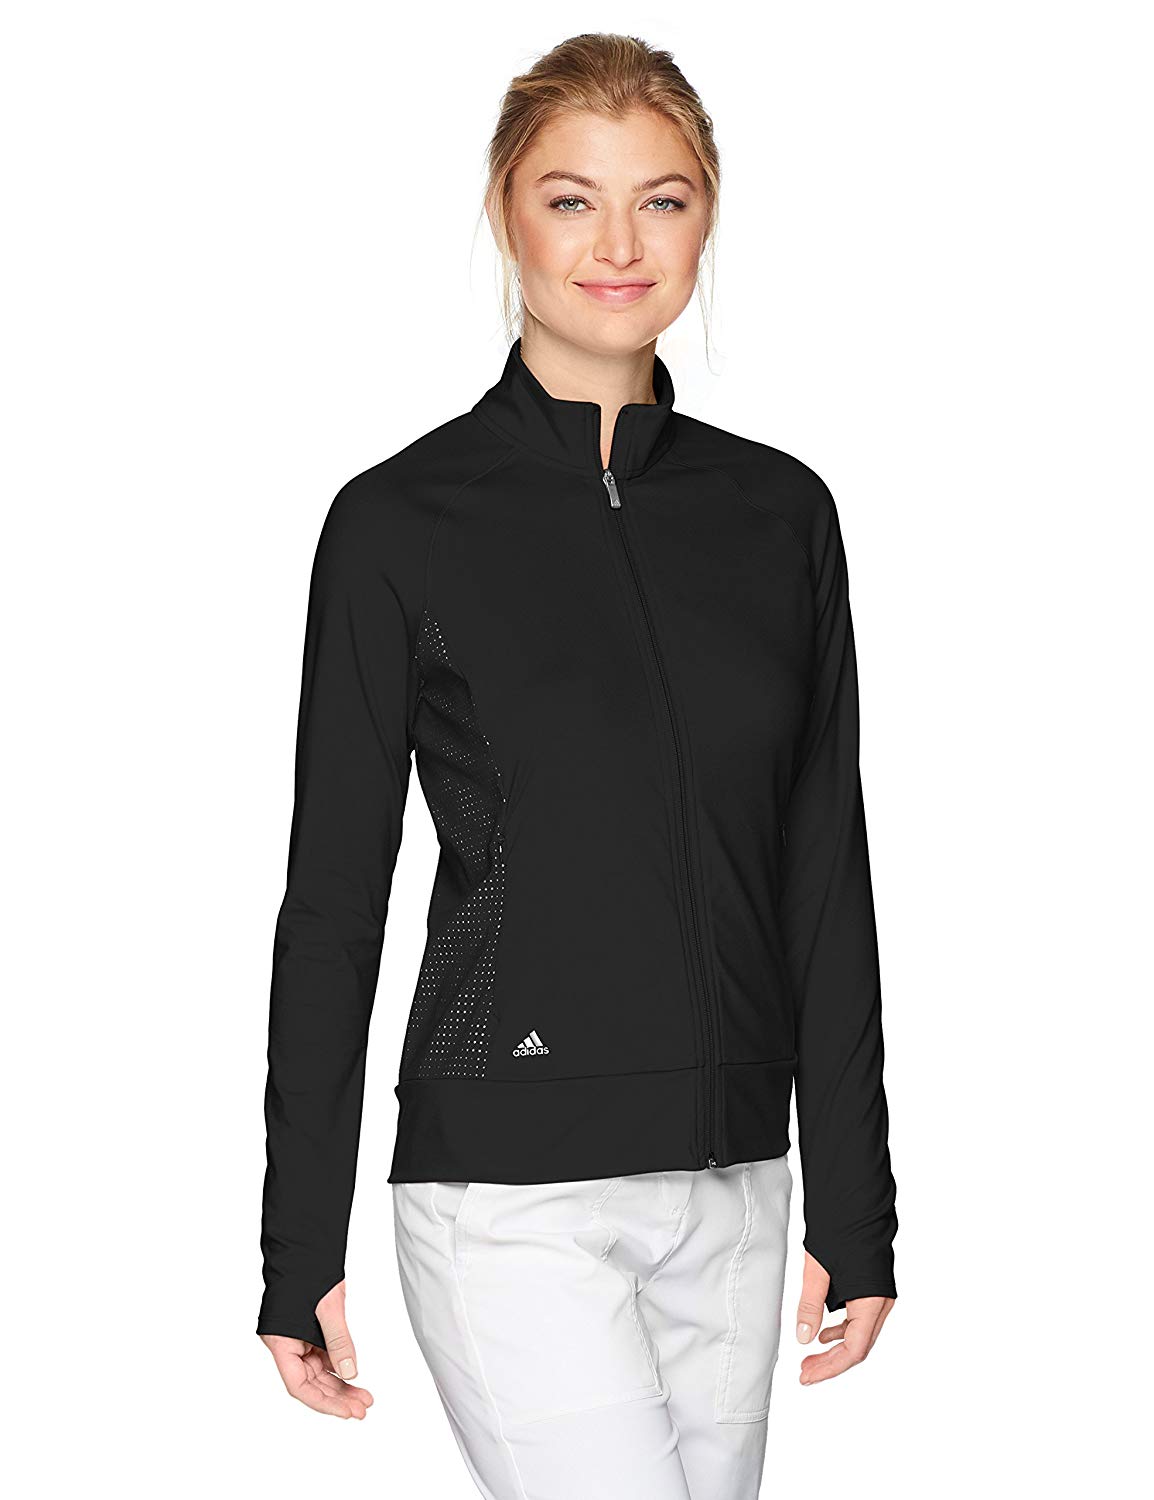 Womens Adidas Range Wear Full Zip Golf Jackets